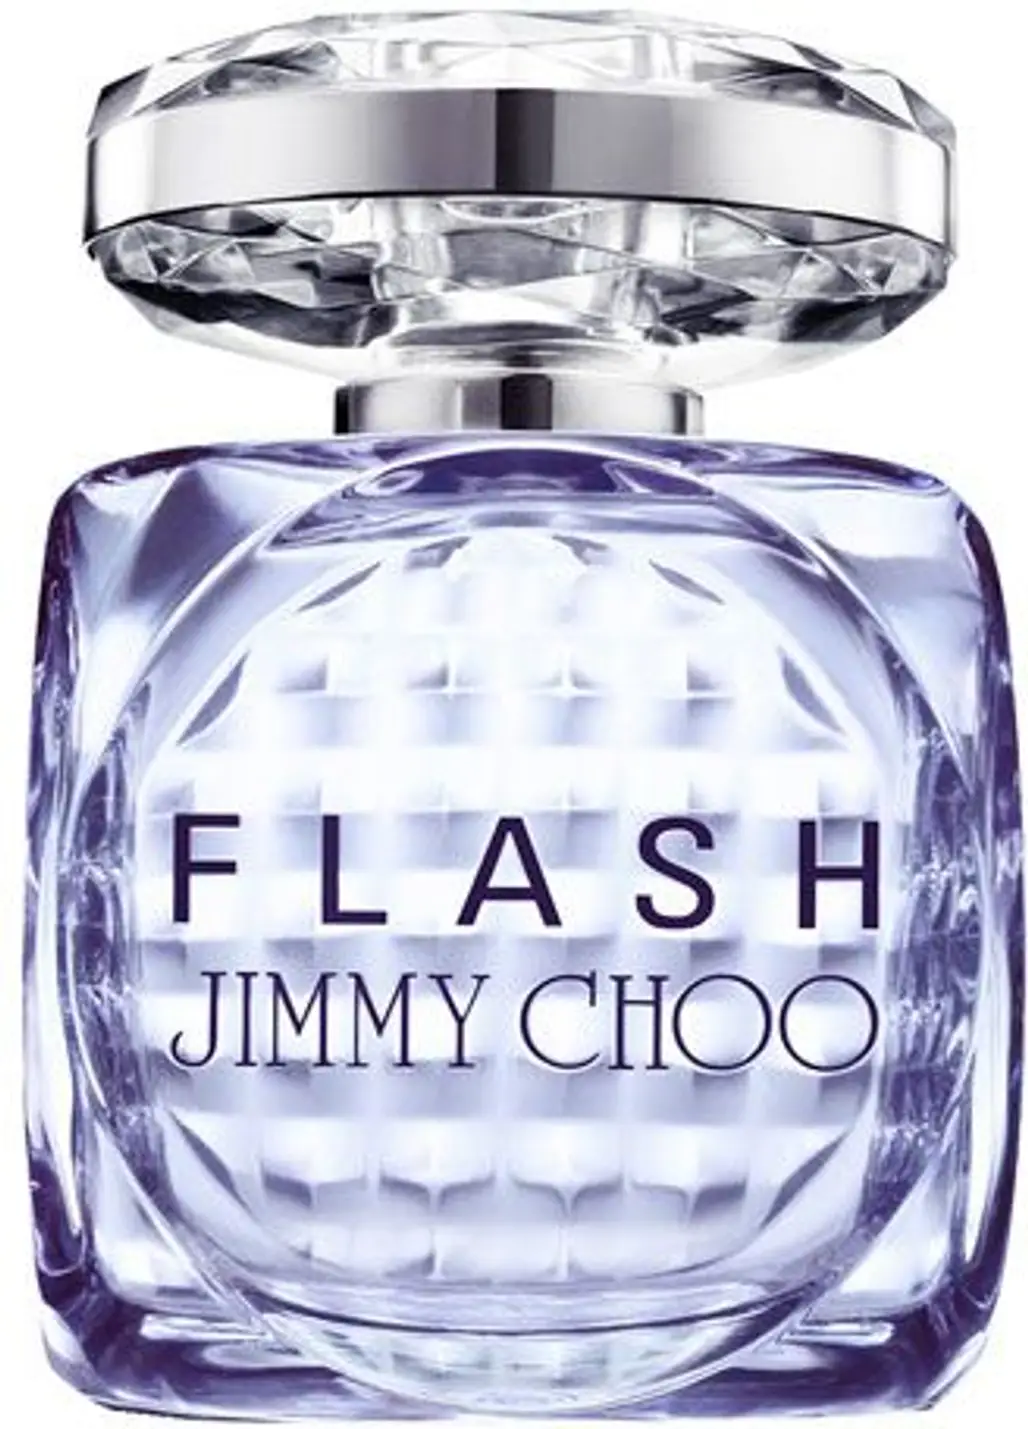 Jimmy Choo ‘Flash’